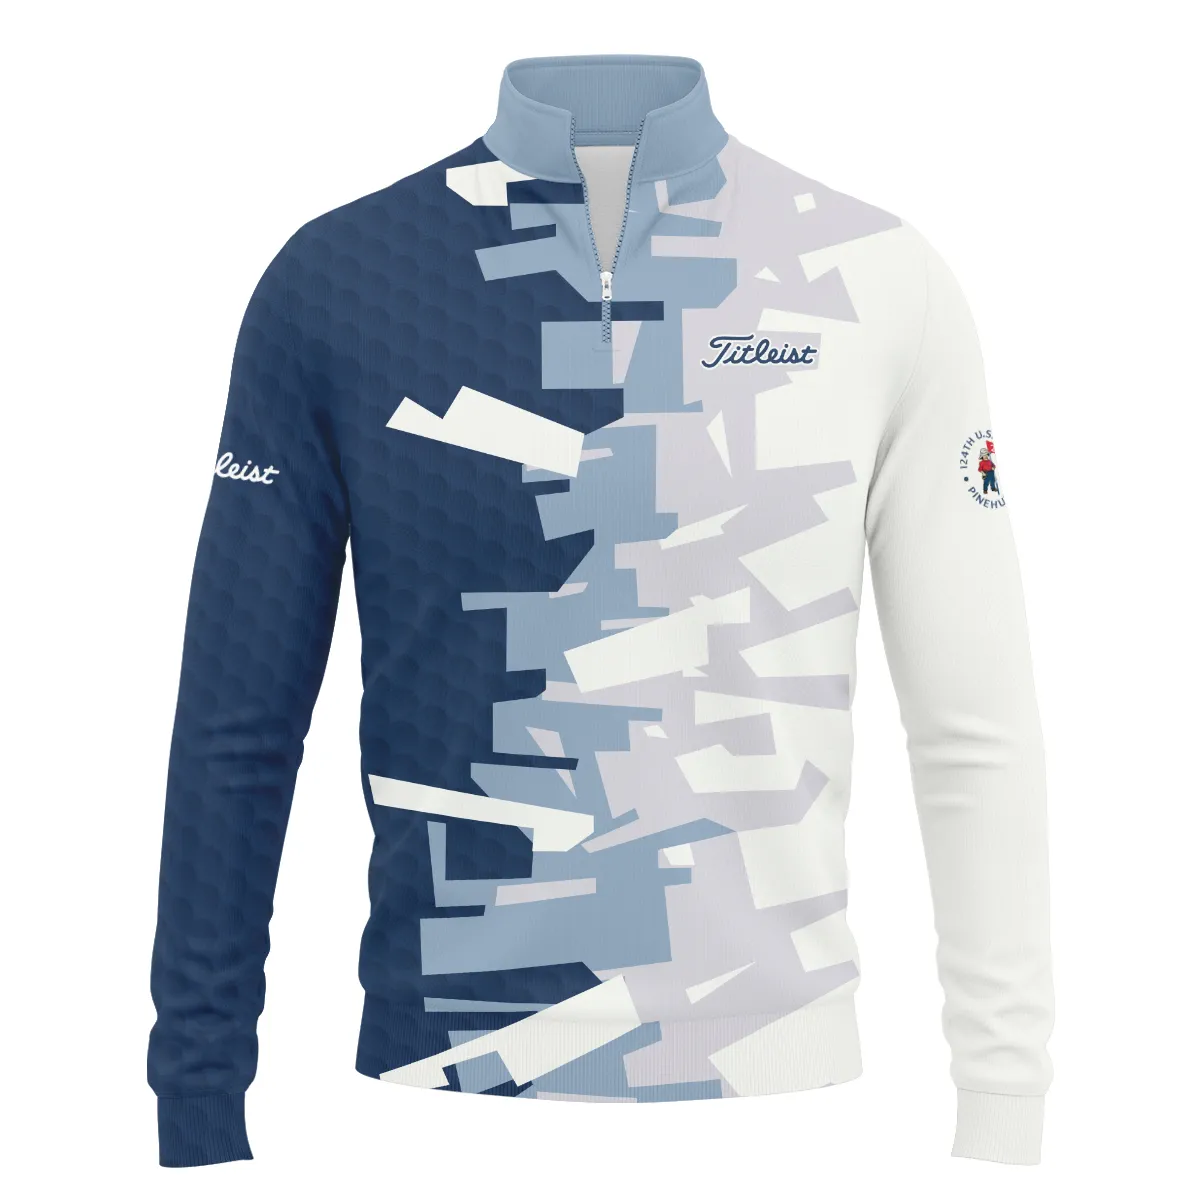 Golf Abstract Pattern 124th U.S. Open Pinehurst Titleist Style Classic, Short Sleeve Round Neck Polo Shirt